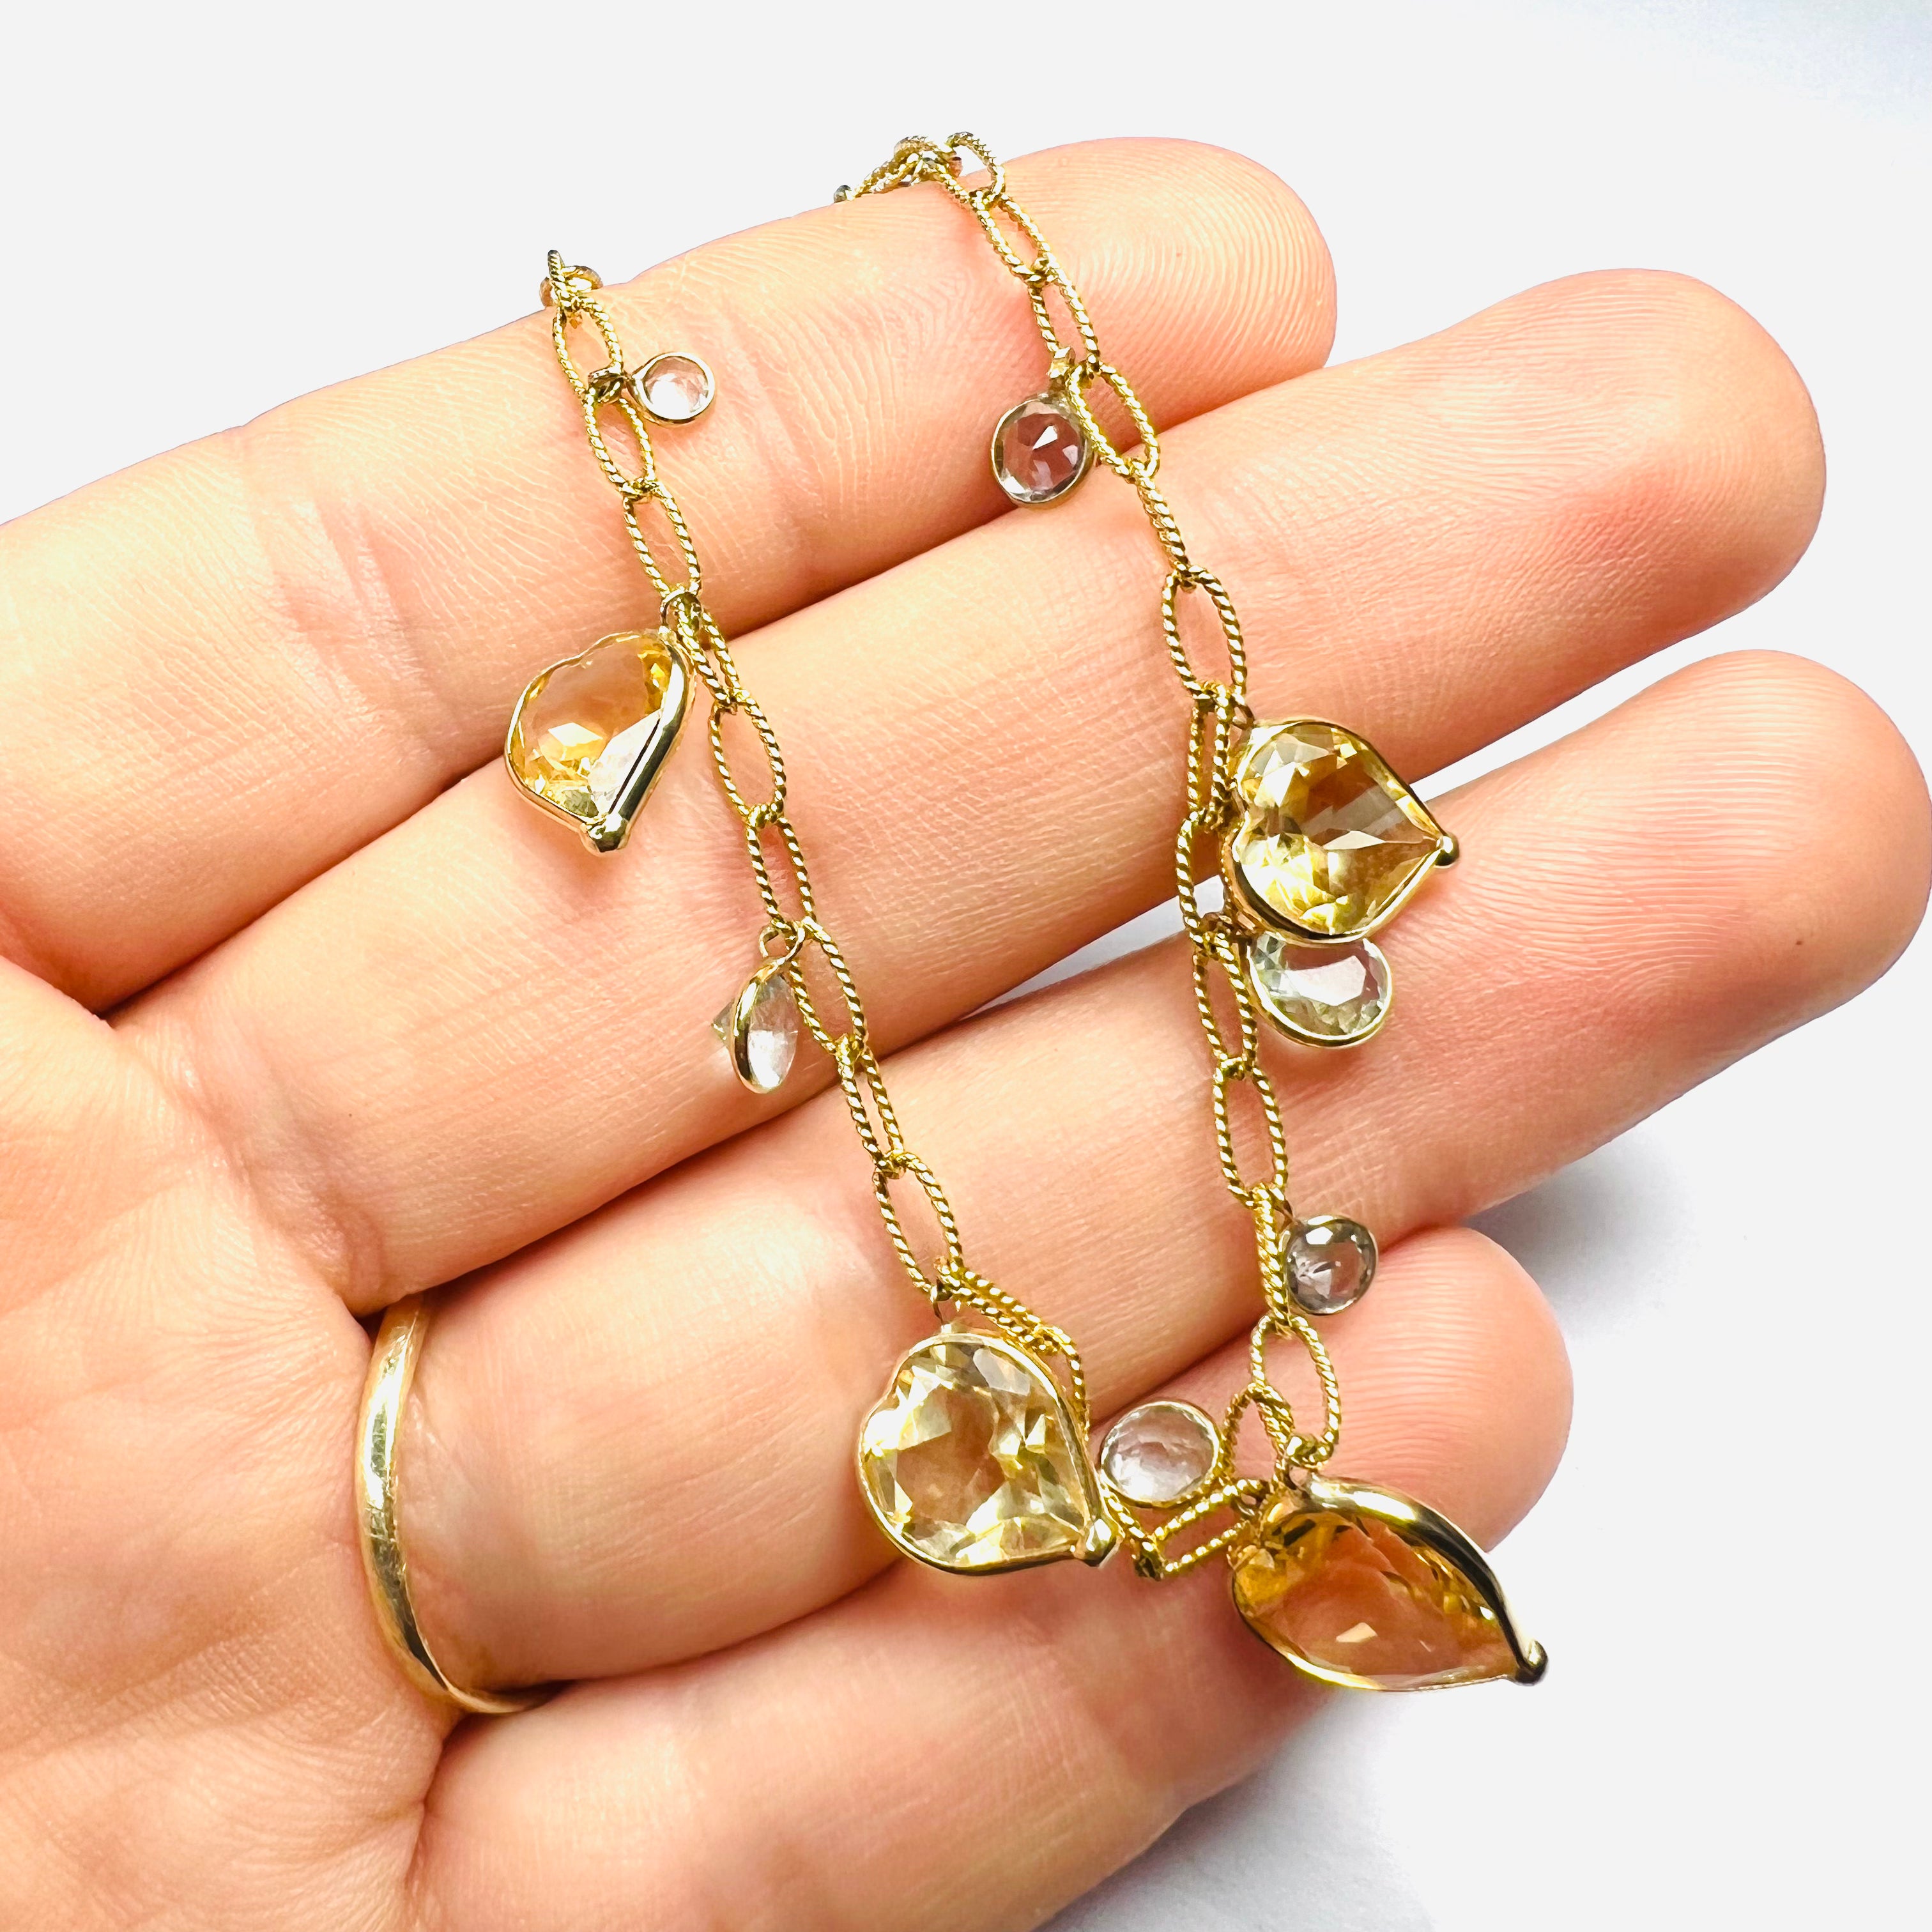 14K Yellow Gold Heart Citrine & Aquamarine Textured Link Bracelet 6.5"